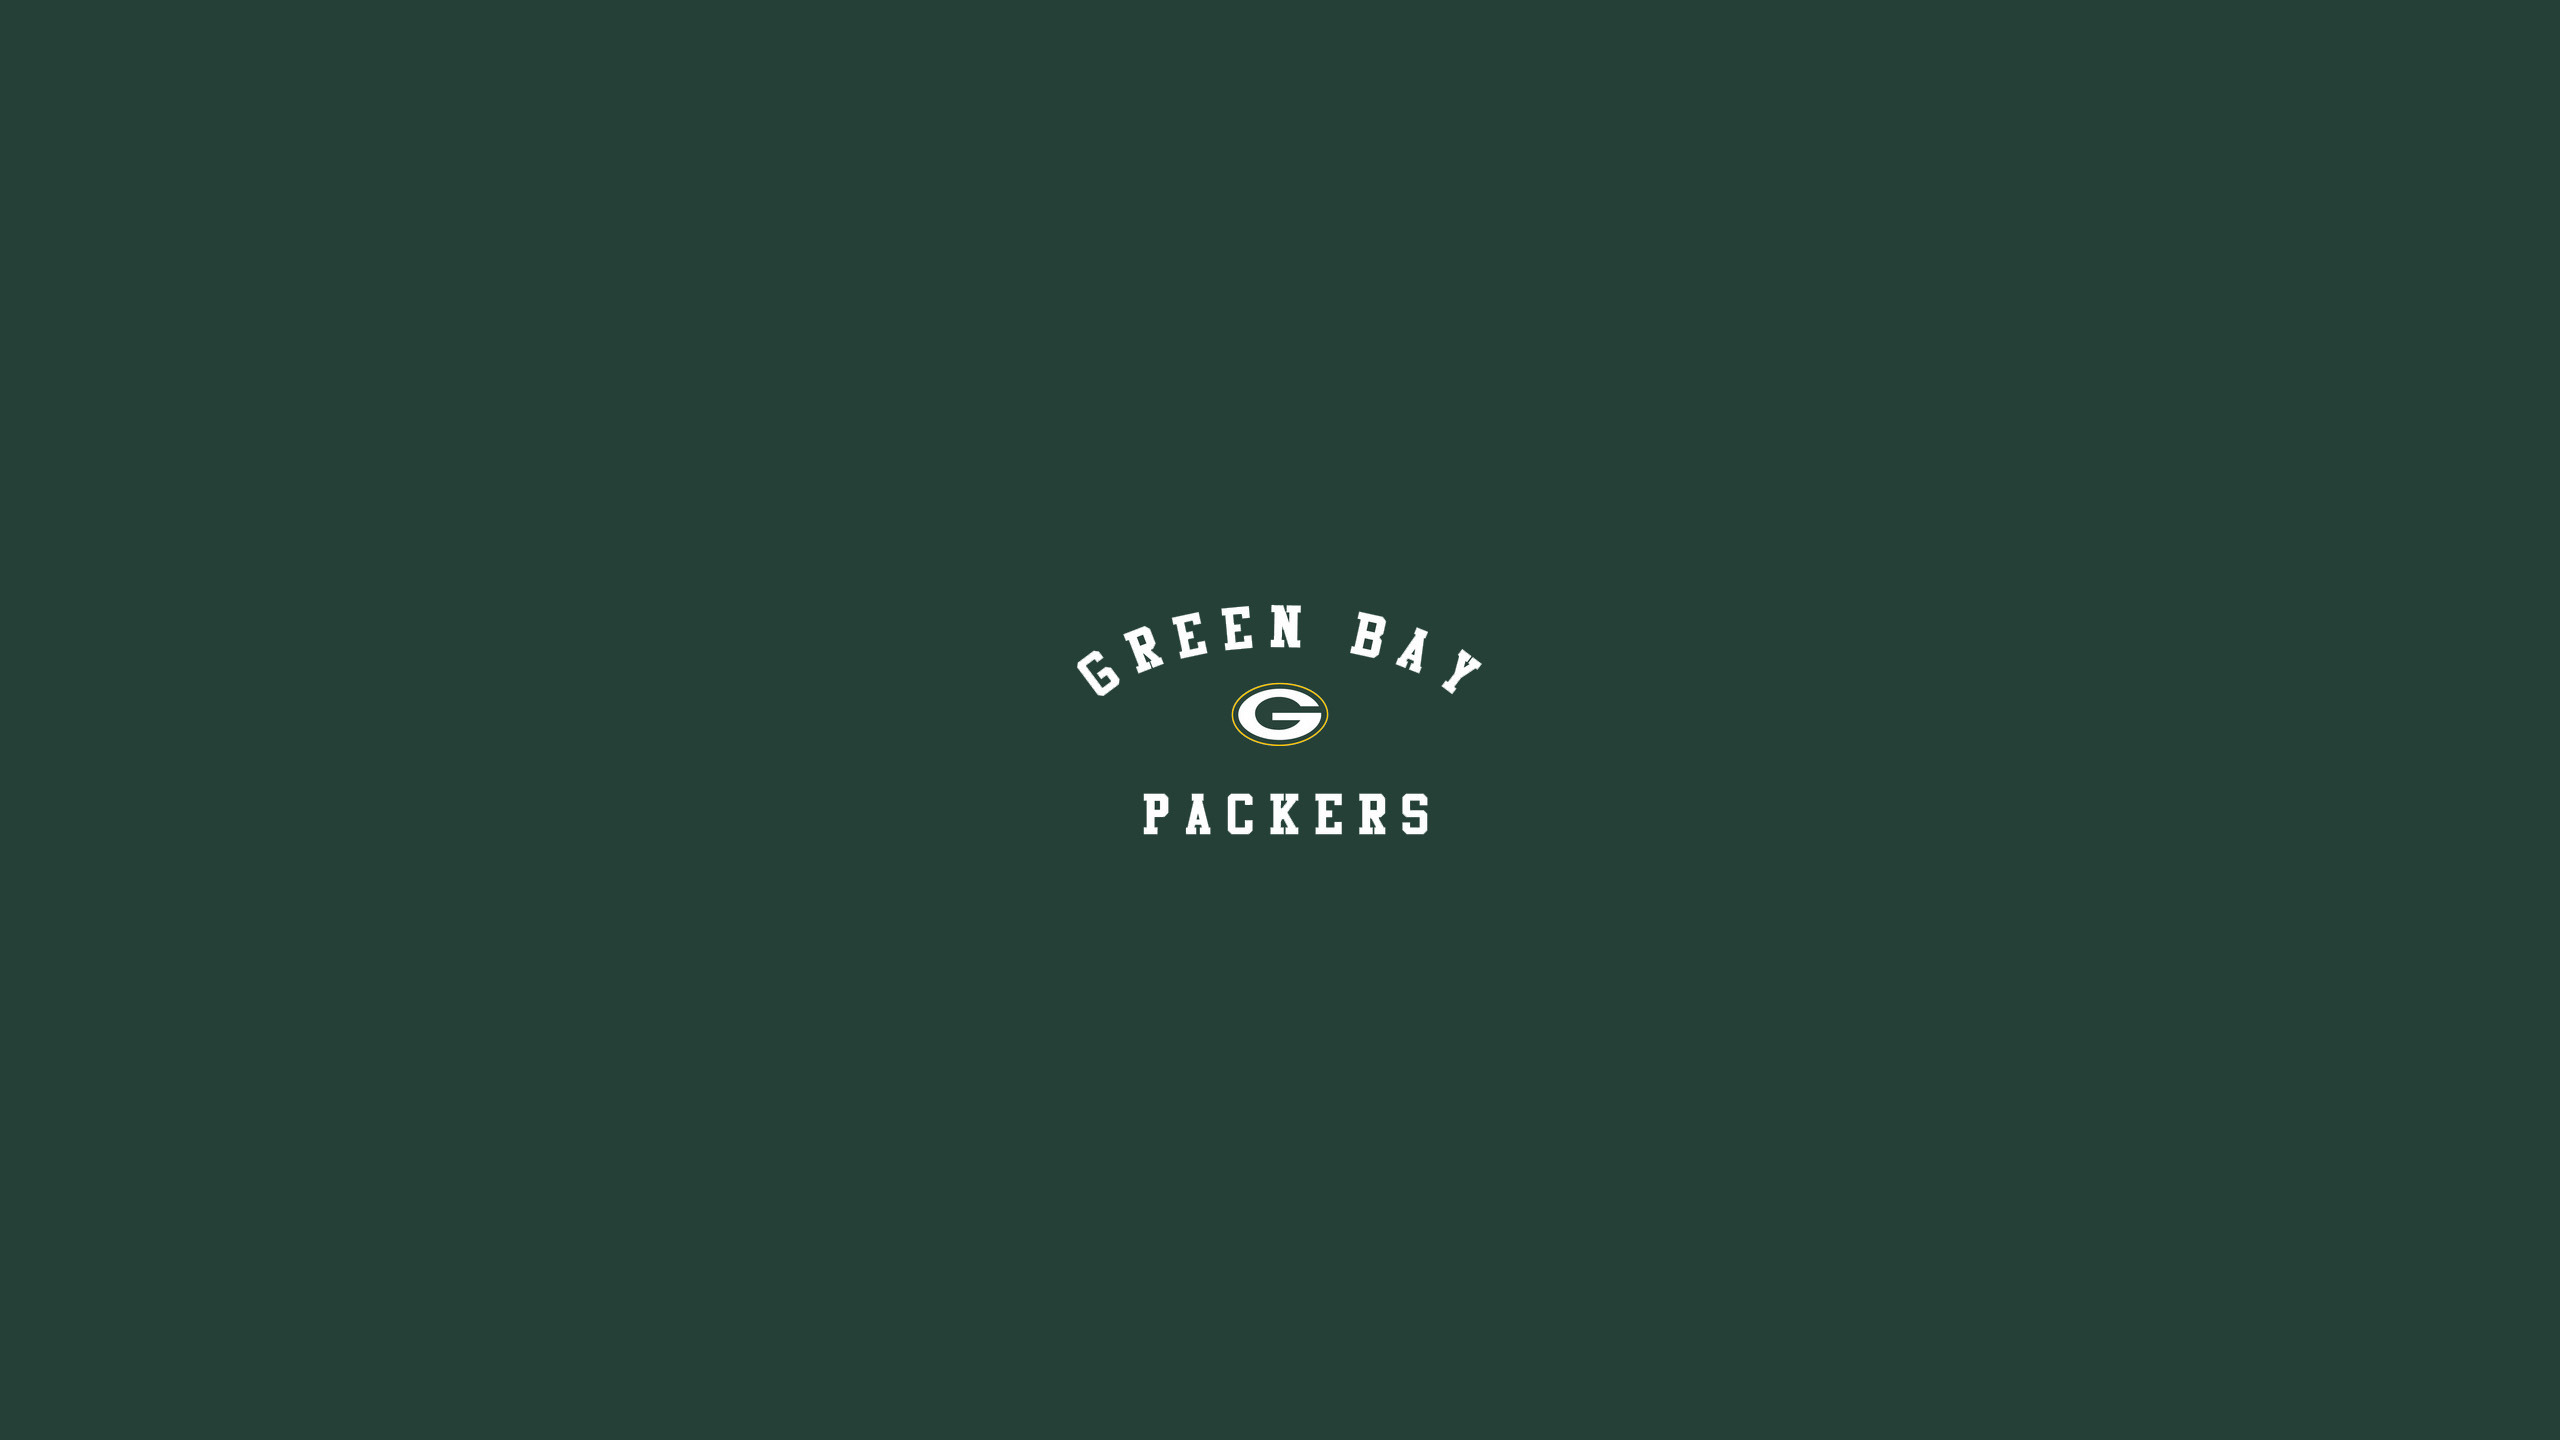 Green Bay Packers  Green bay packers wallpaper, Green bay packers